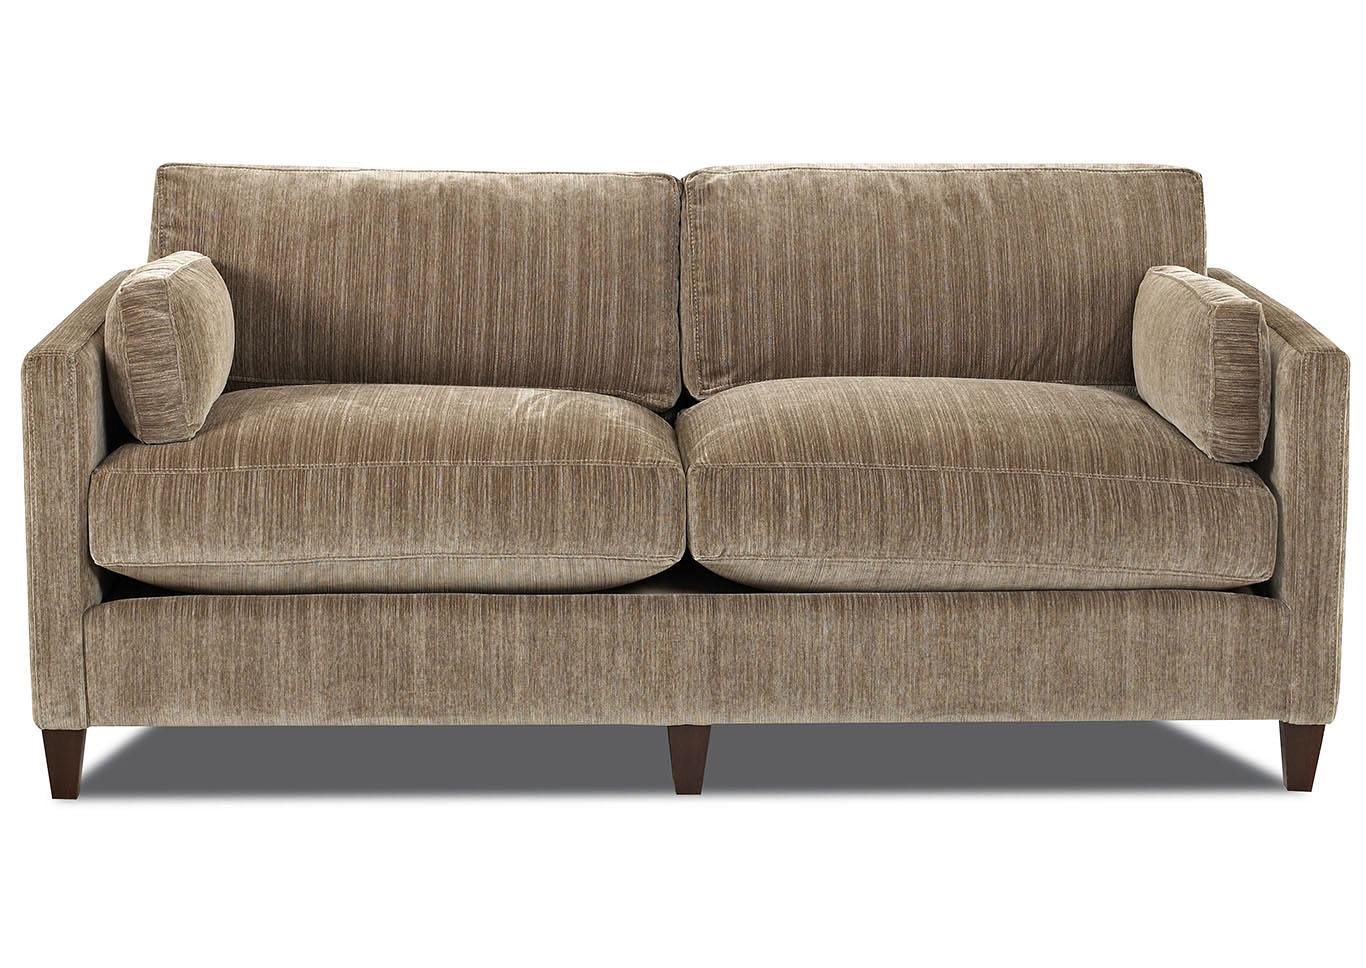 Jordan Aria Stone Stationary Fabric Sofa,Klaussner Home Furnishings